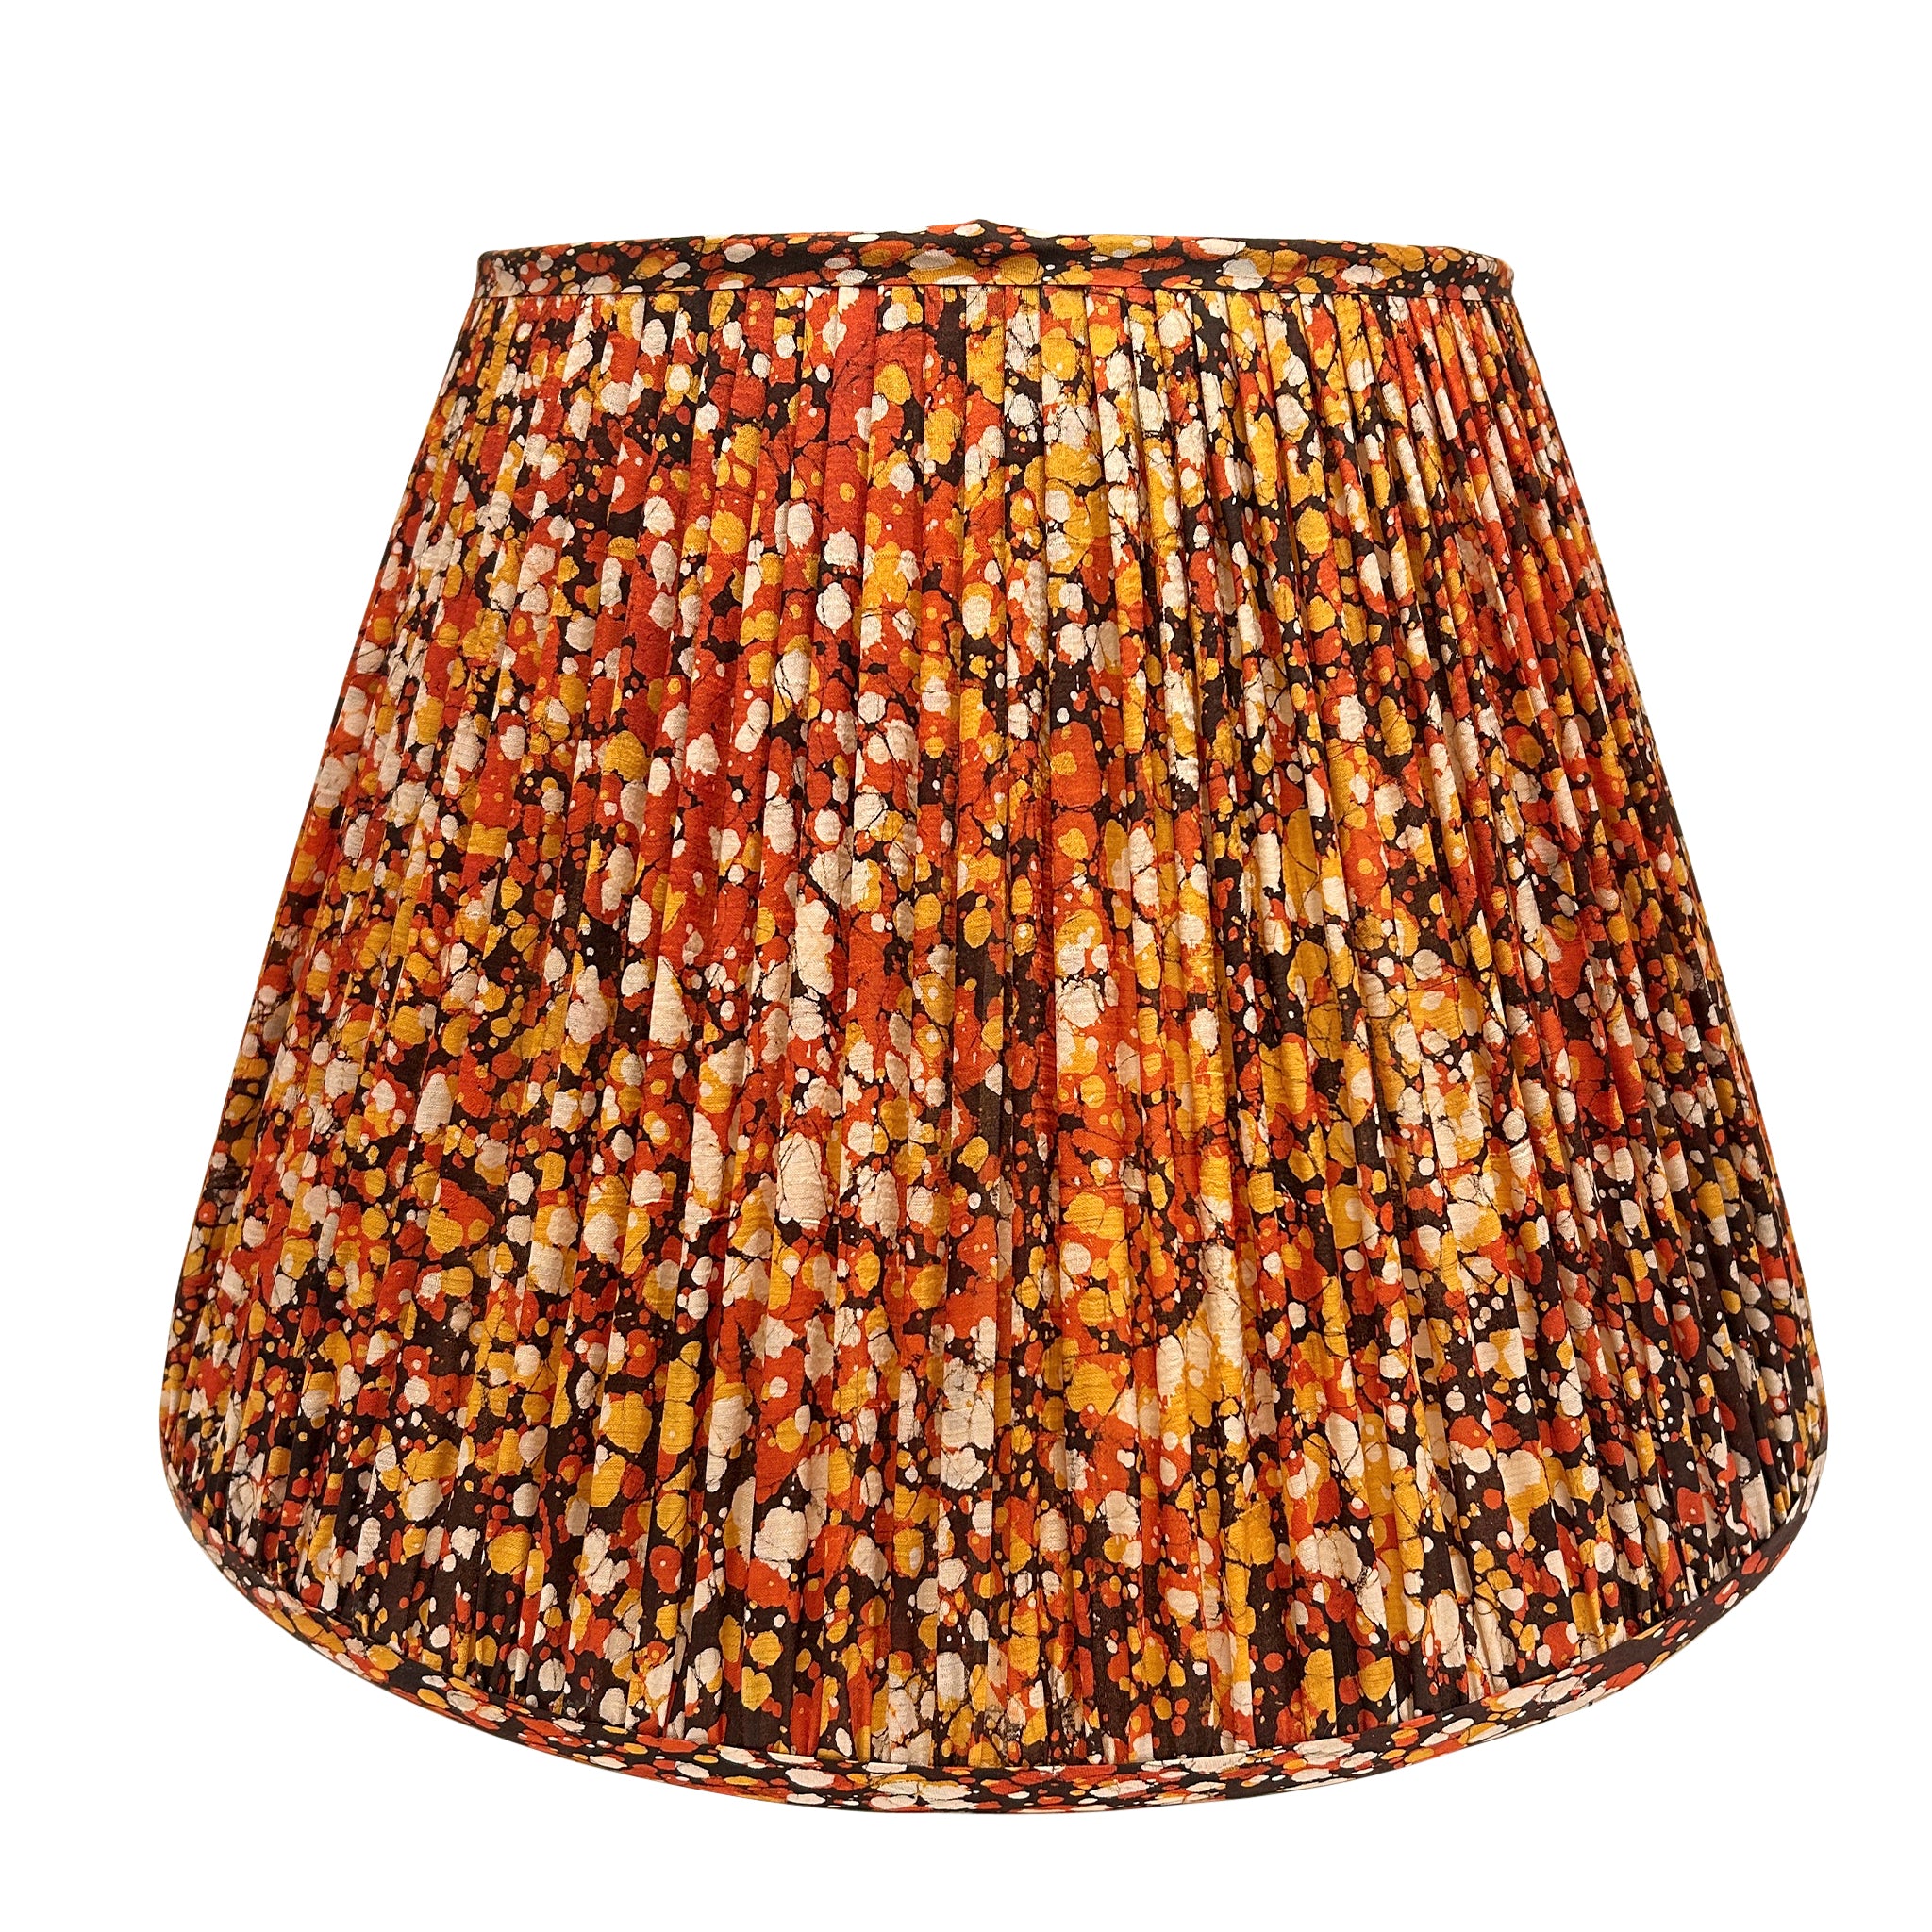 18" Silk Sari Lampshade - Autumn Splatter